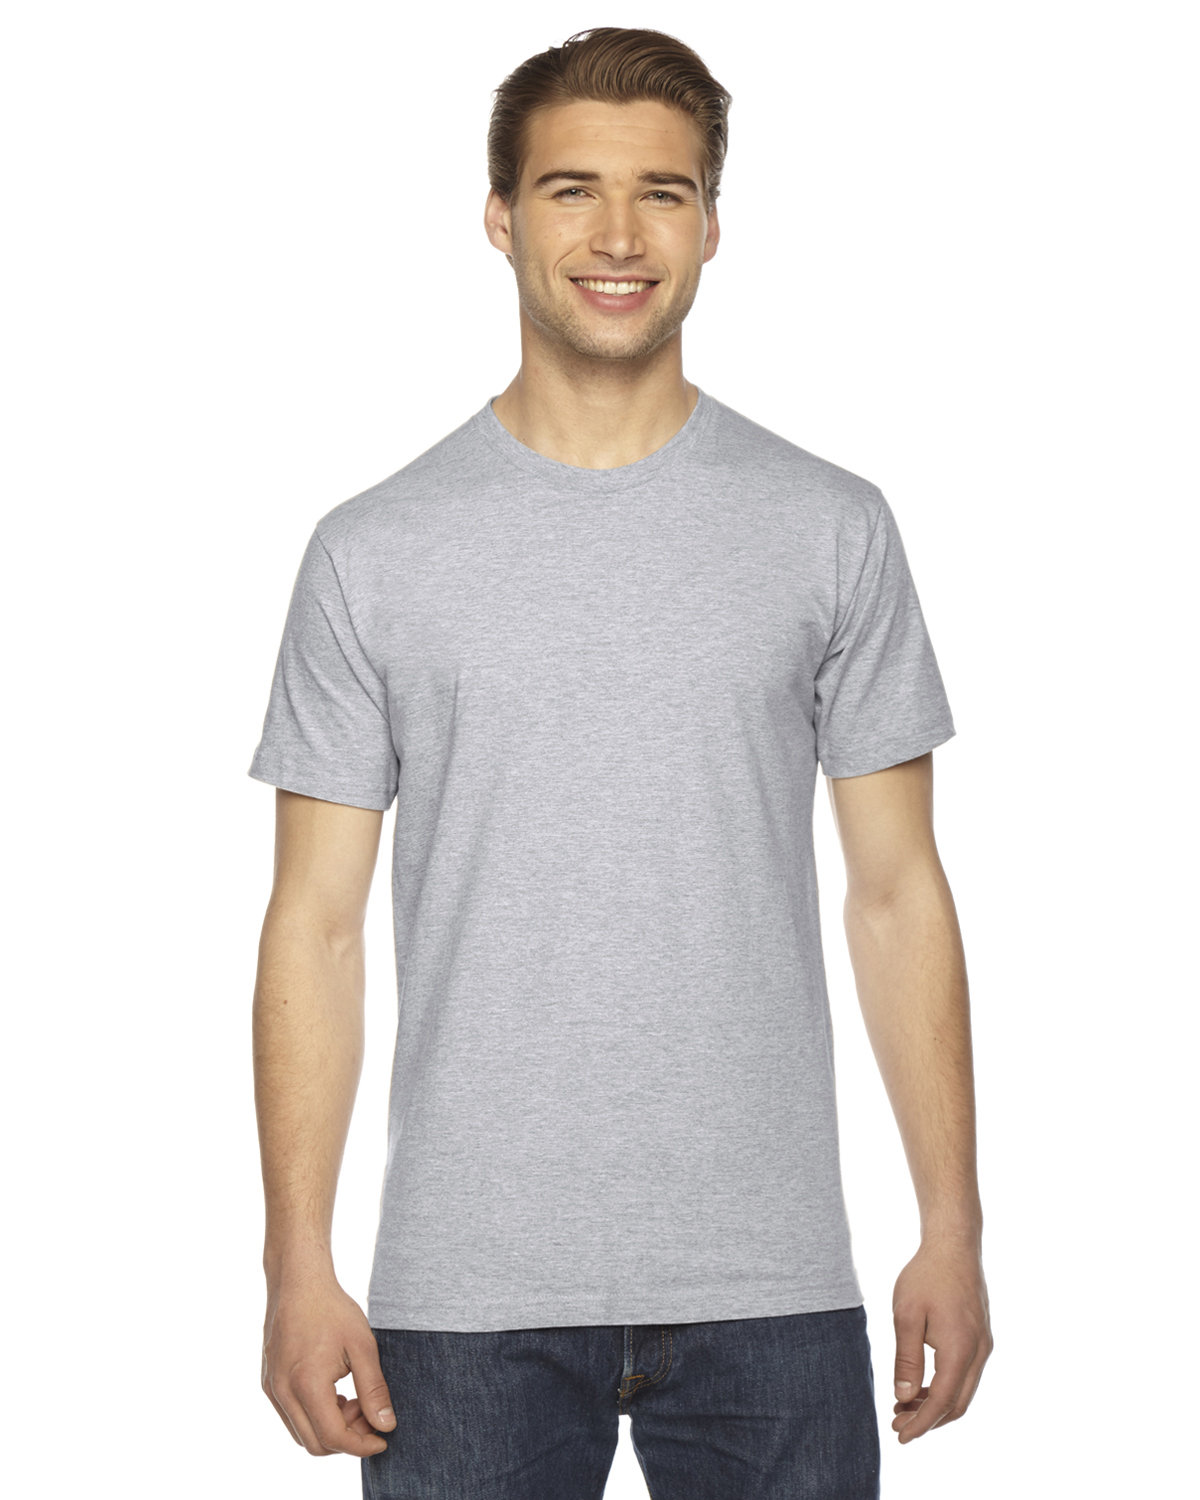 American Apparel Unisex Fine Jersey Short-Sleeve T-Shirt HEATHER GREY 